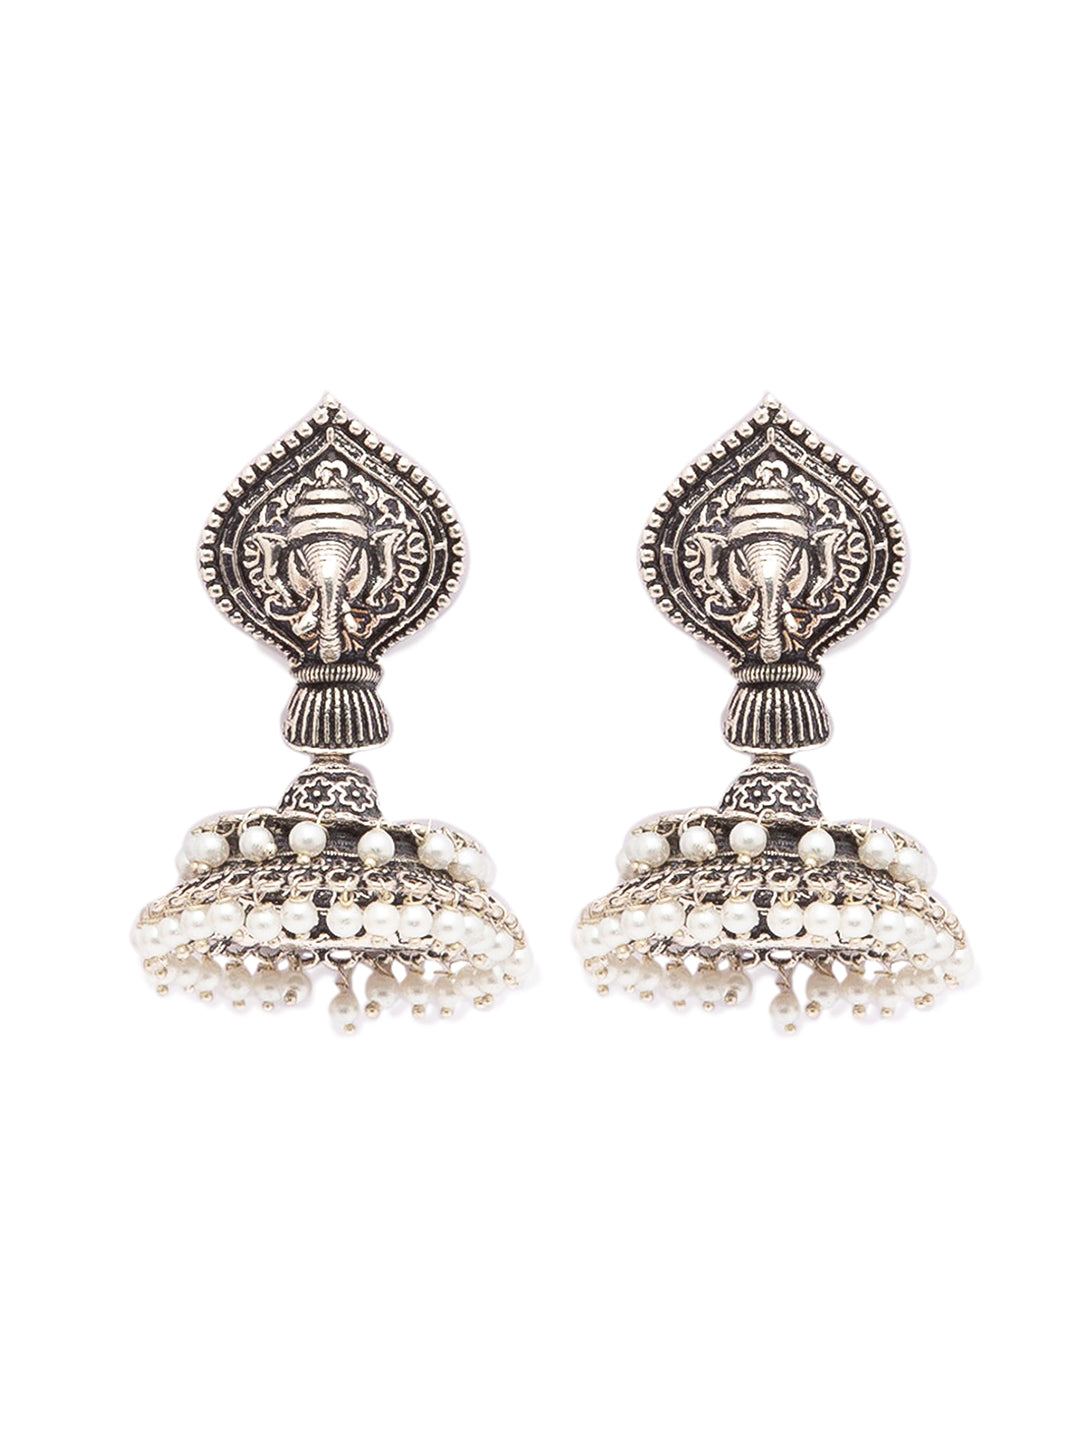 German Oxidized Silver Earrings Antique Tribal Trendy Ganesha Engraved Lightweight Dangler Jhumka